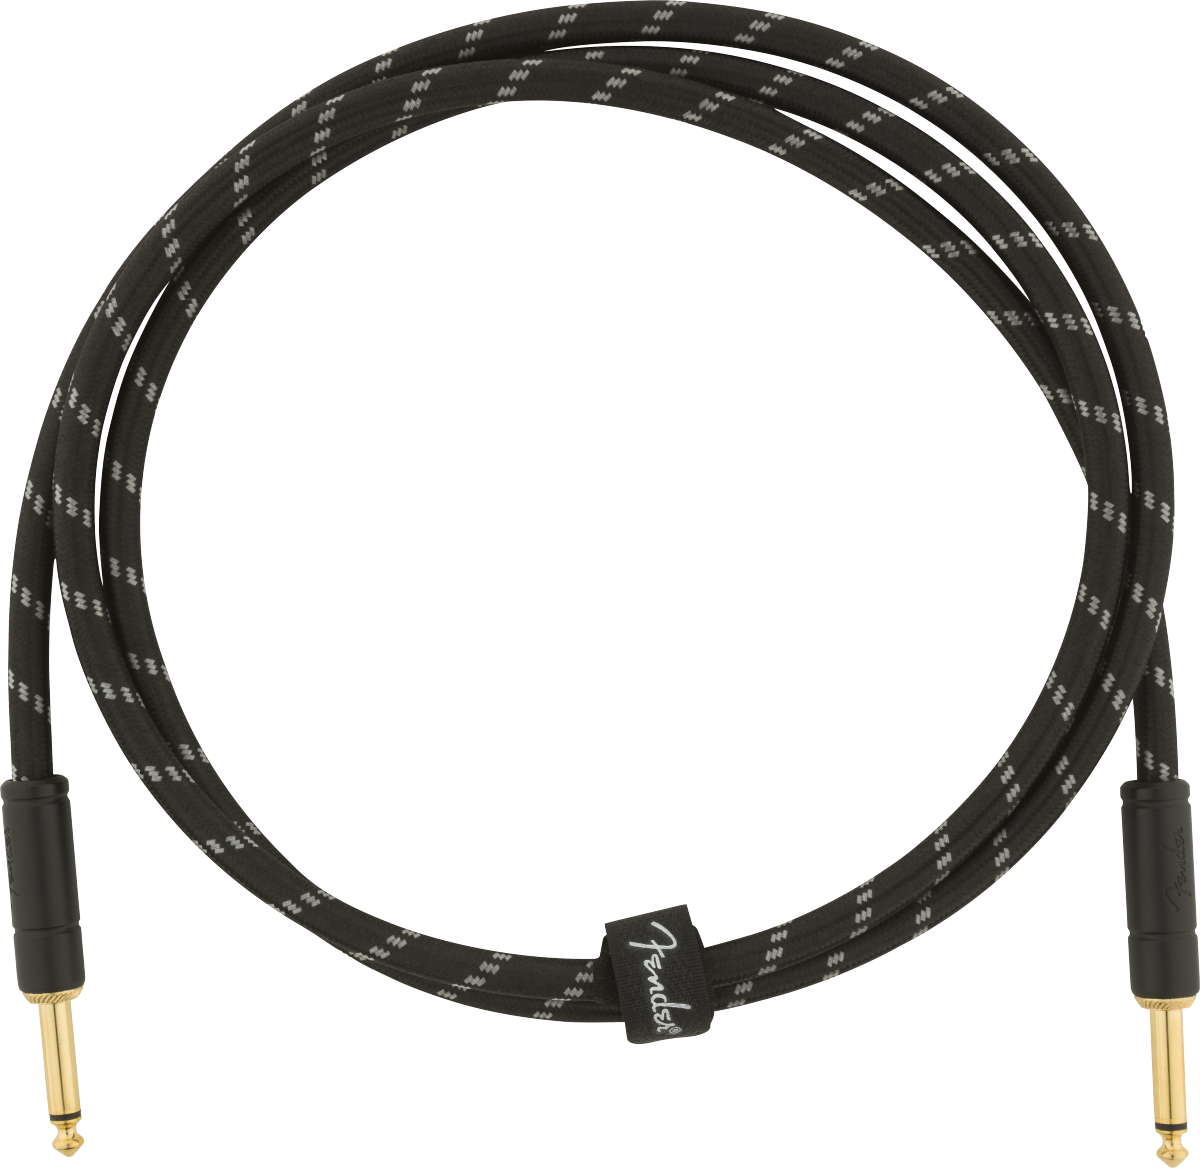 Fender Deluxe Instrument Cable Droit/droit 5ft Black Tweed - Cable - Main picture